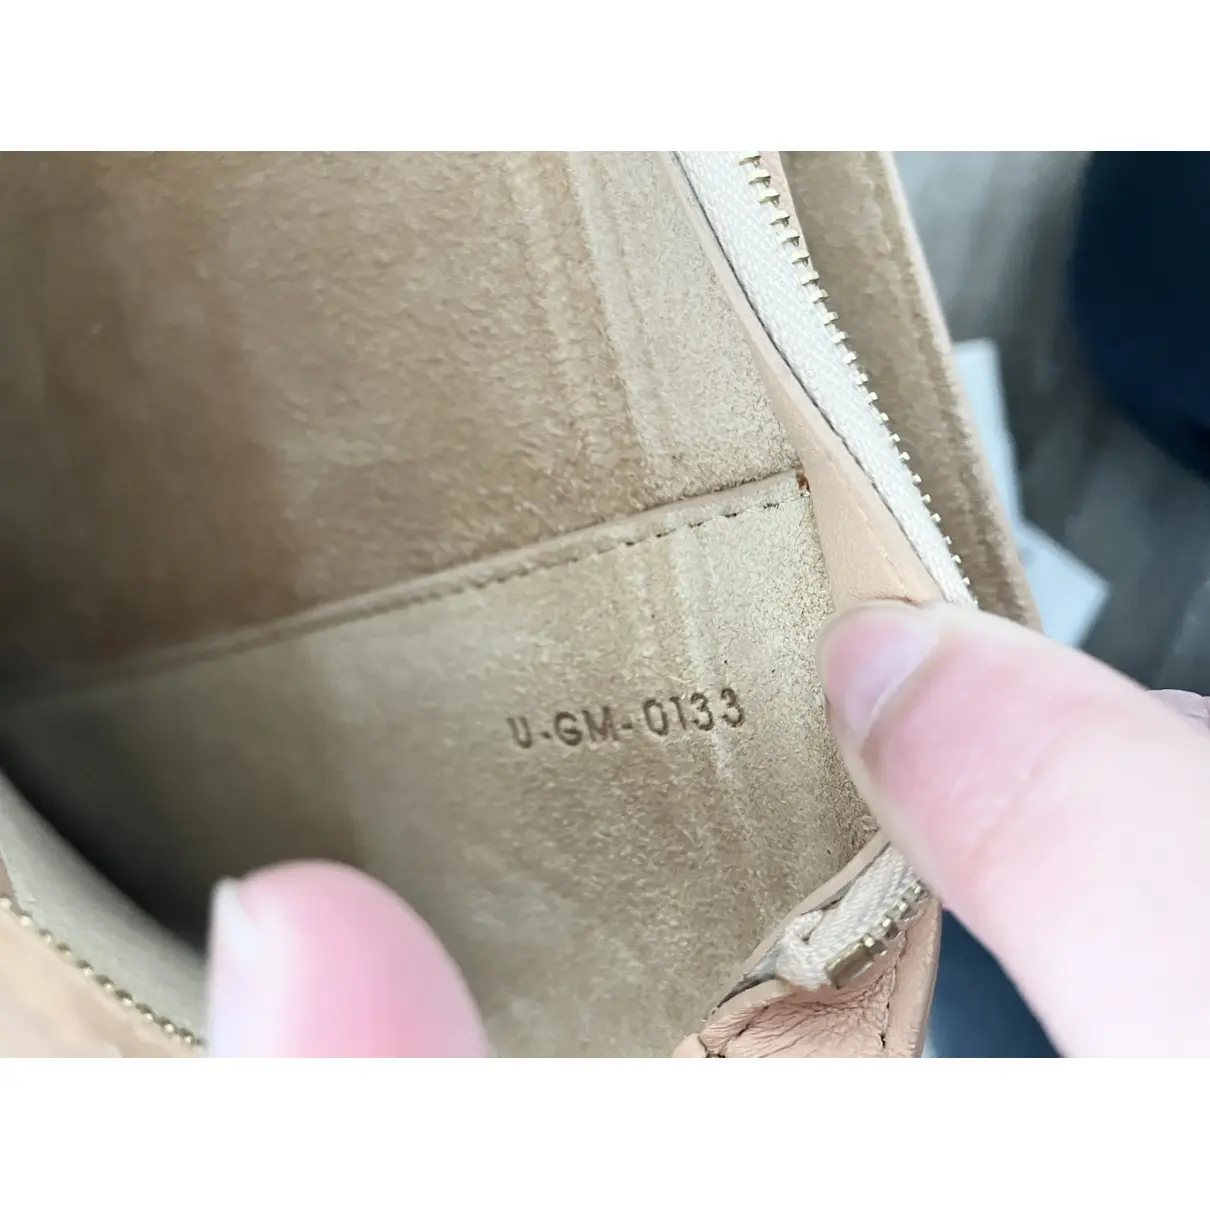 Leather clutch bag Celine